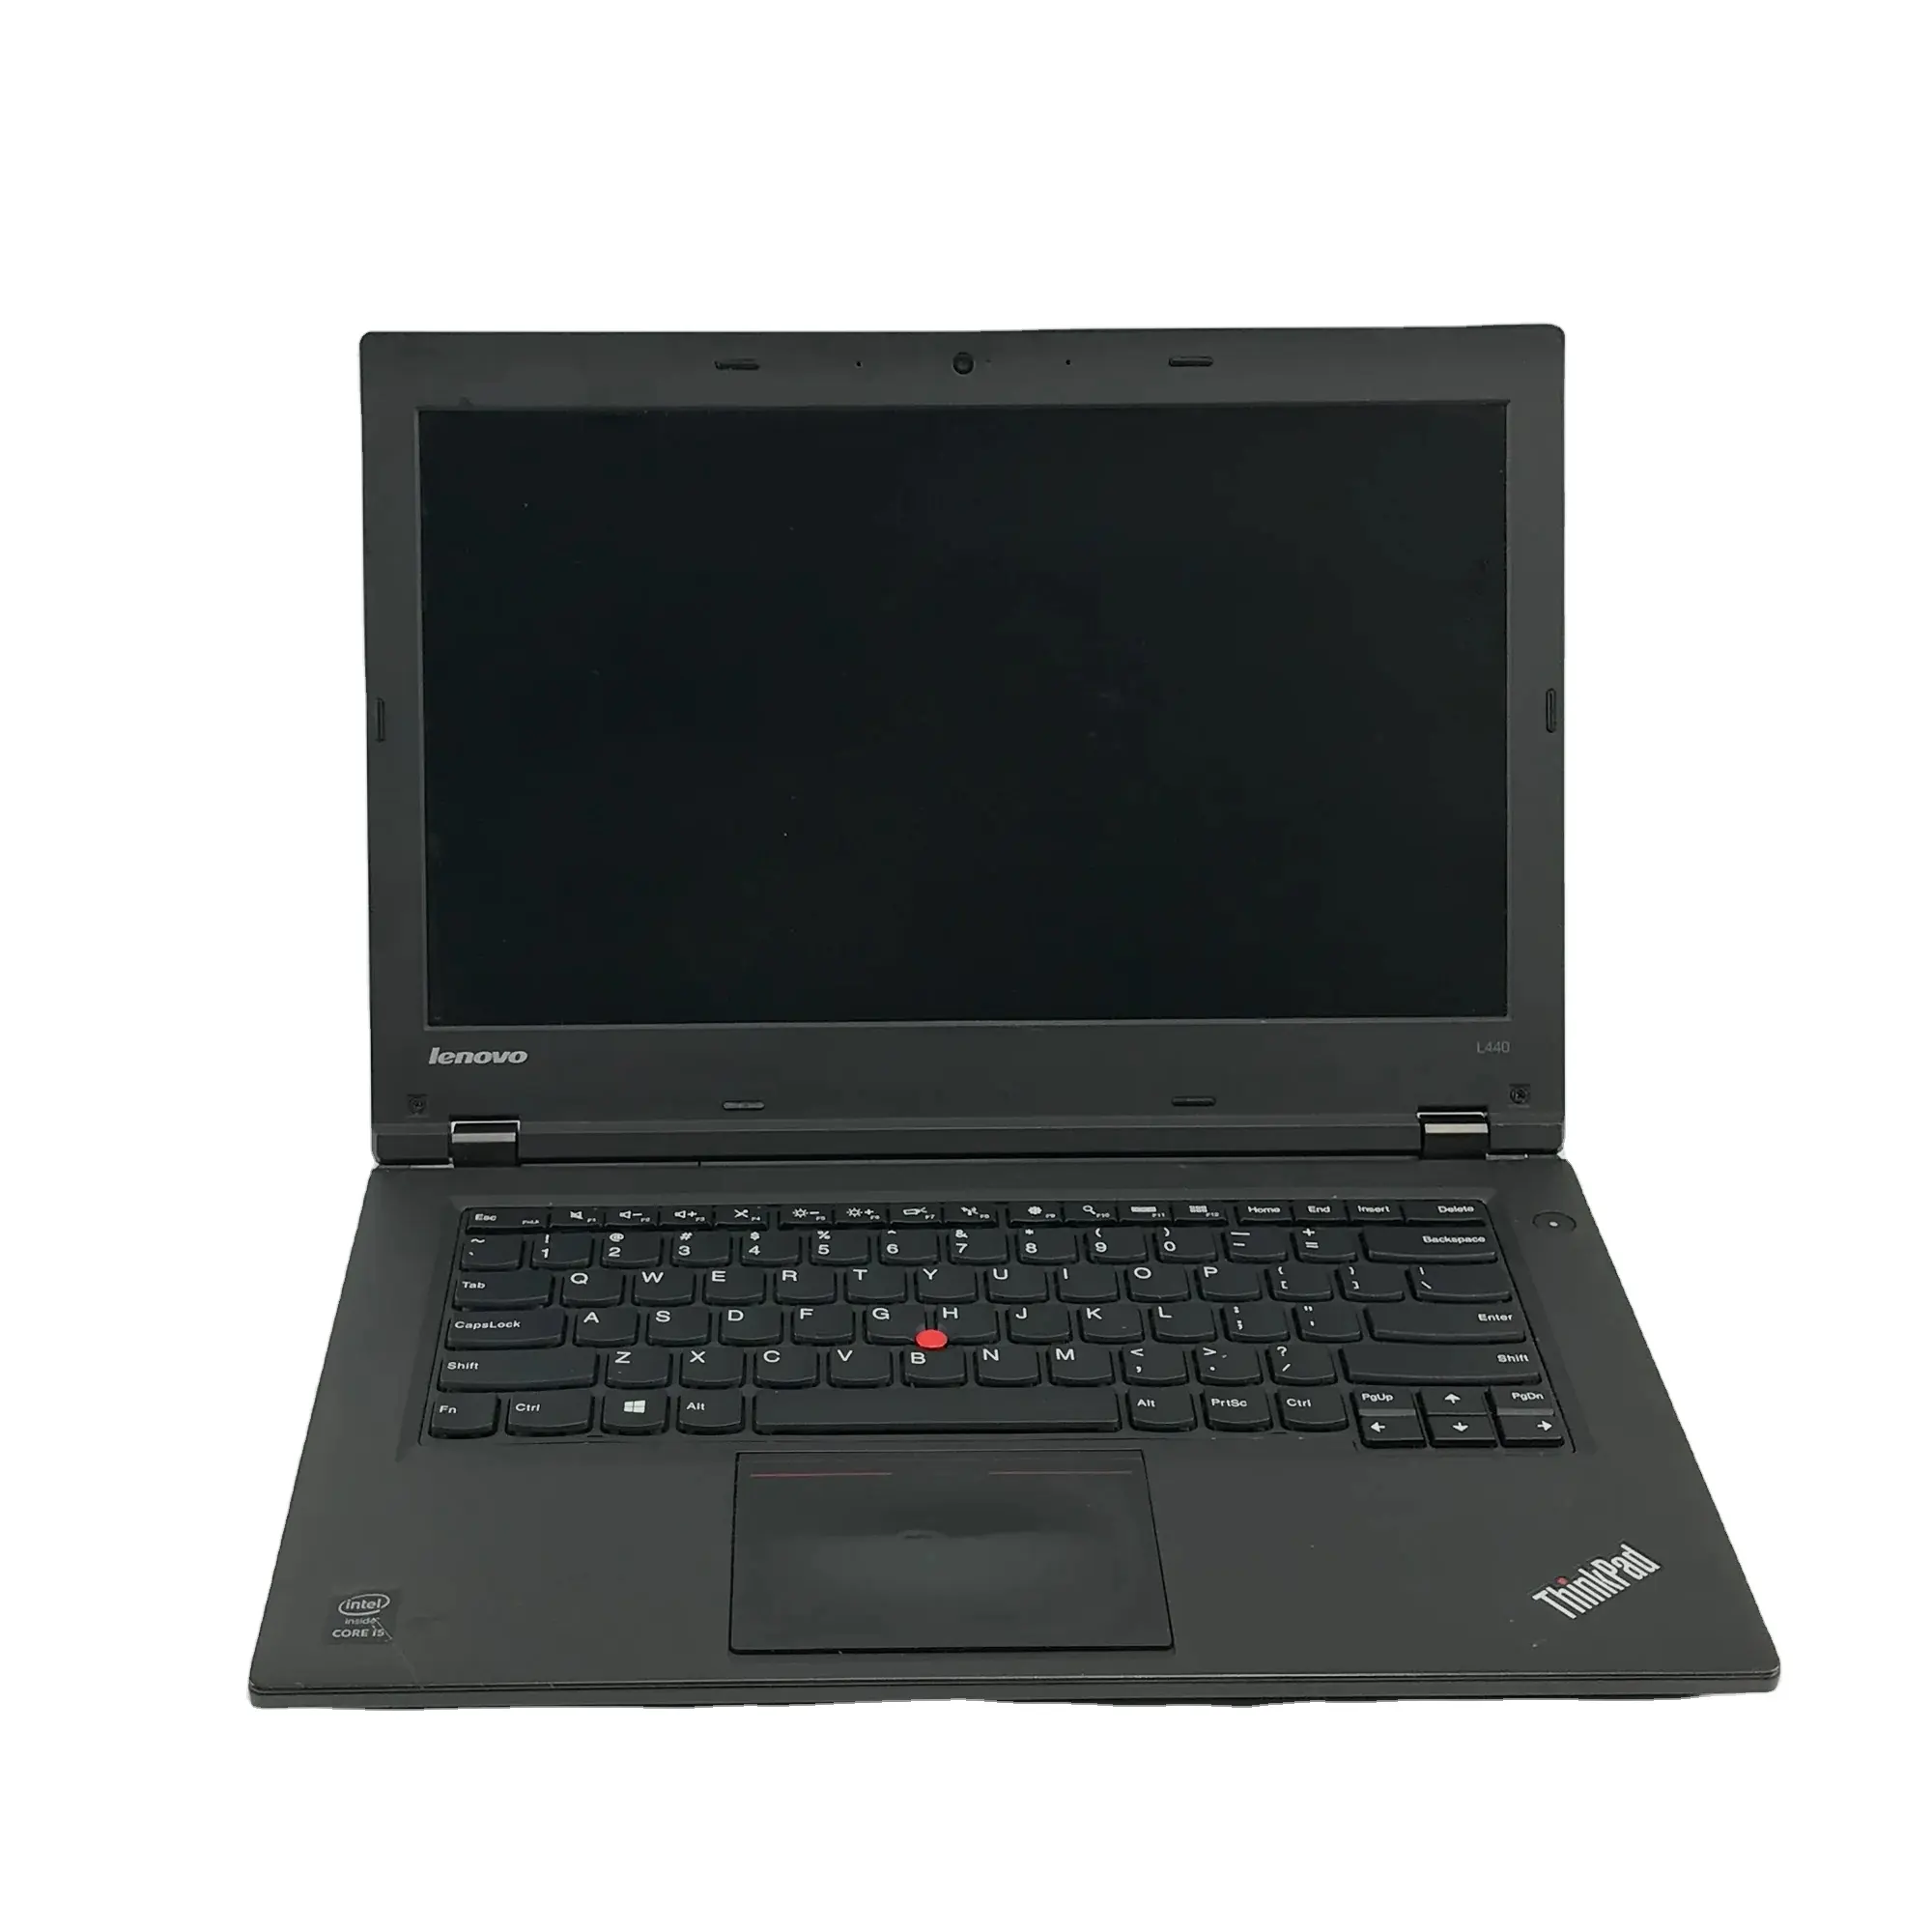 ThinkPad L440 14 "i5-4200M 2.6GHz 4GB RAM 500GB แล็ปท็อป HDD เหมาะสำหรับตัวเลือกการประมวลผลที่ดีที่สุดจากเรา